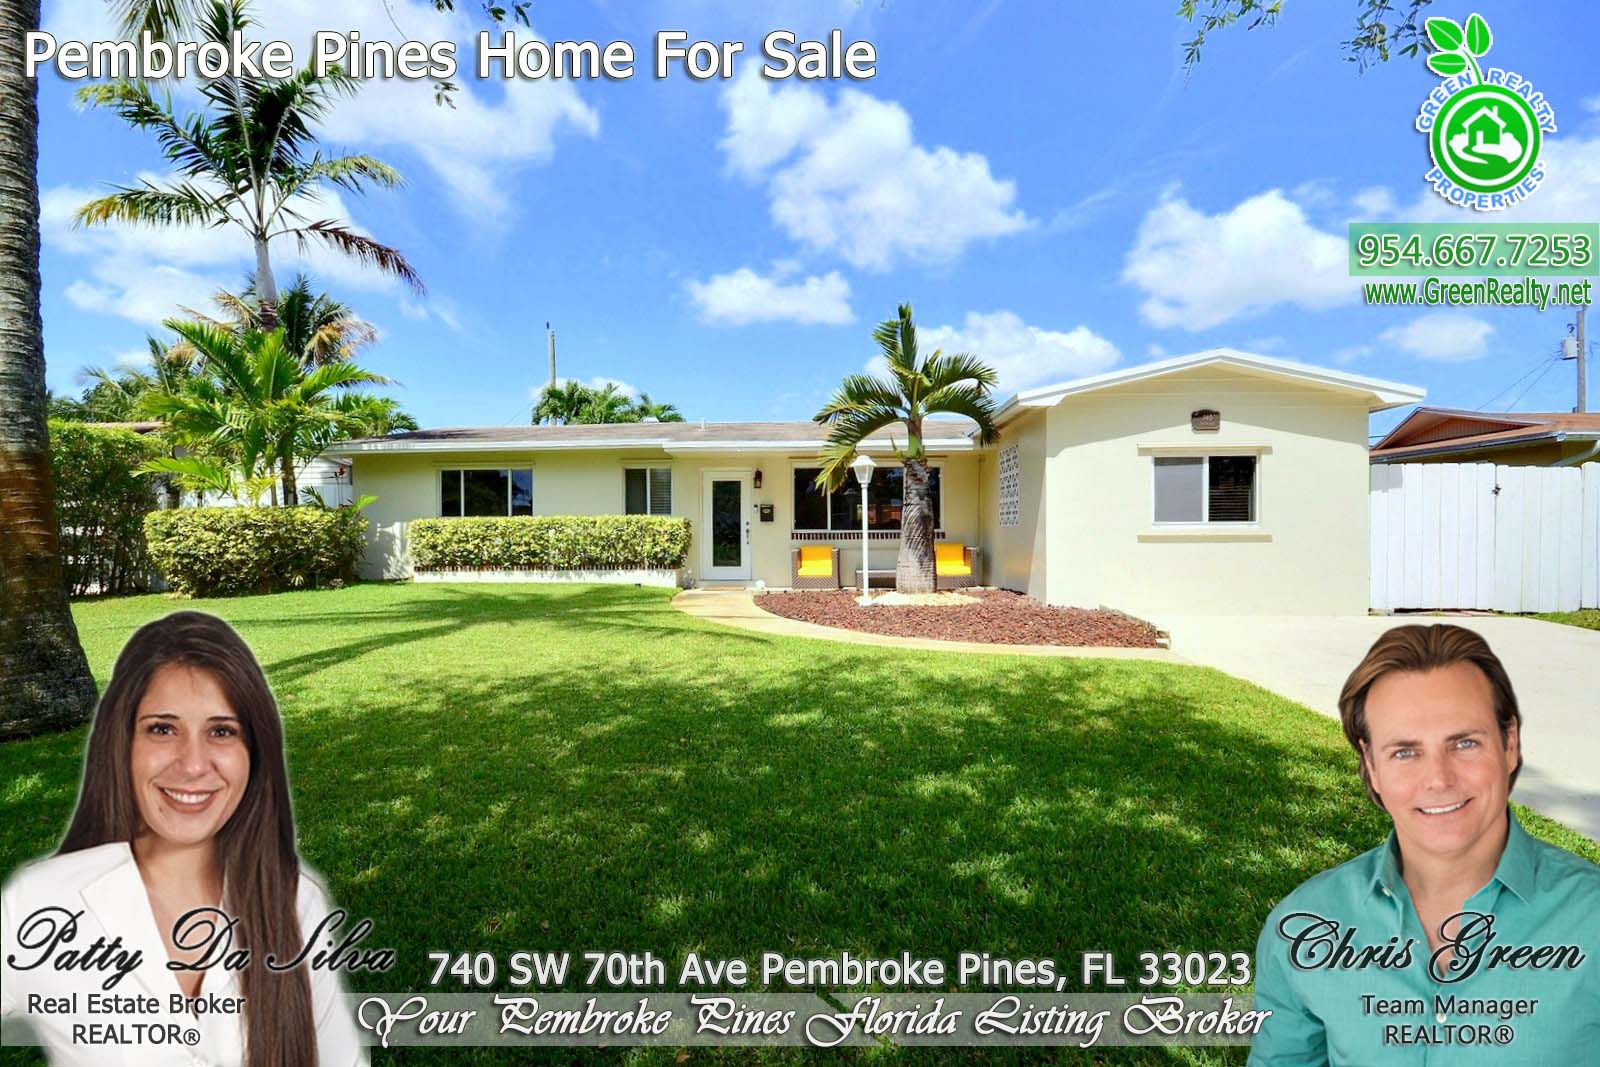 33 Pembroke Pines Real Estate For Sale (2)